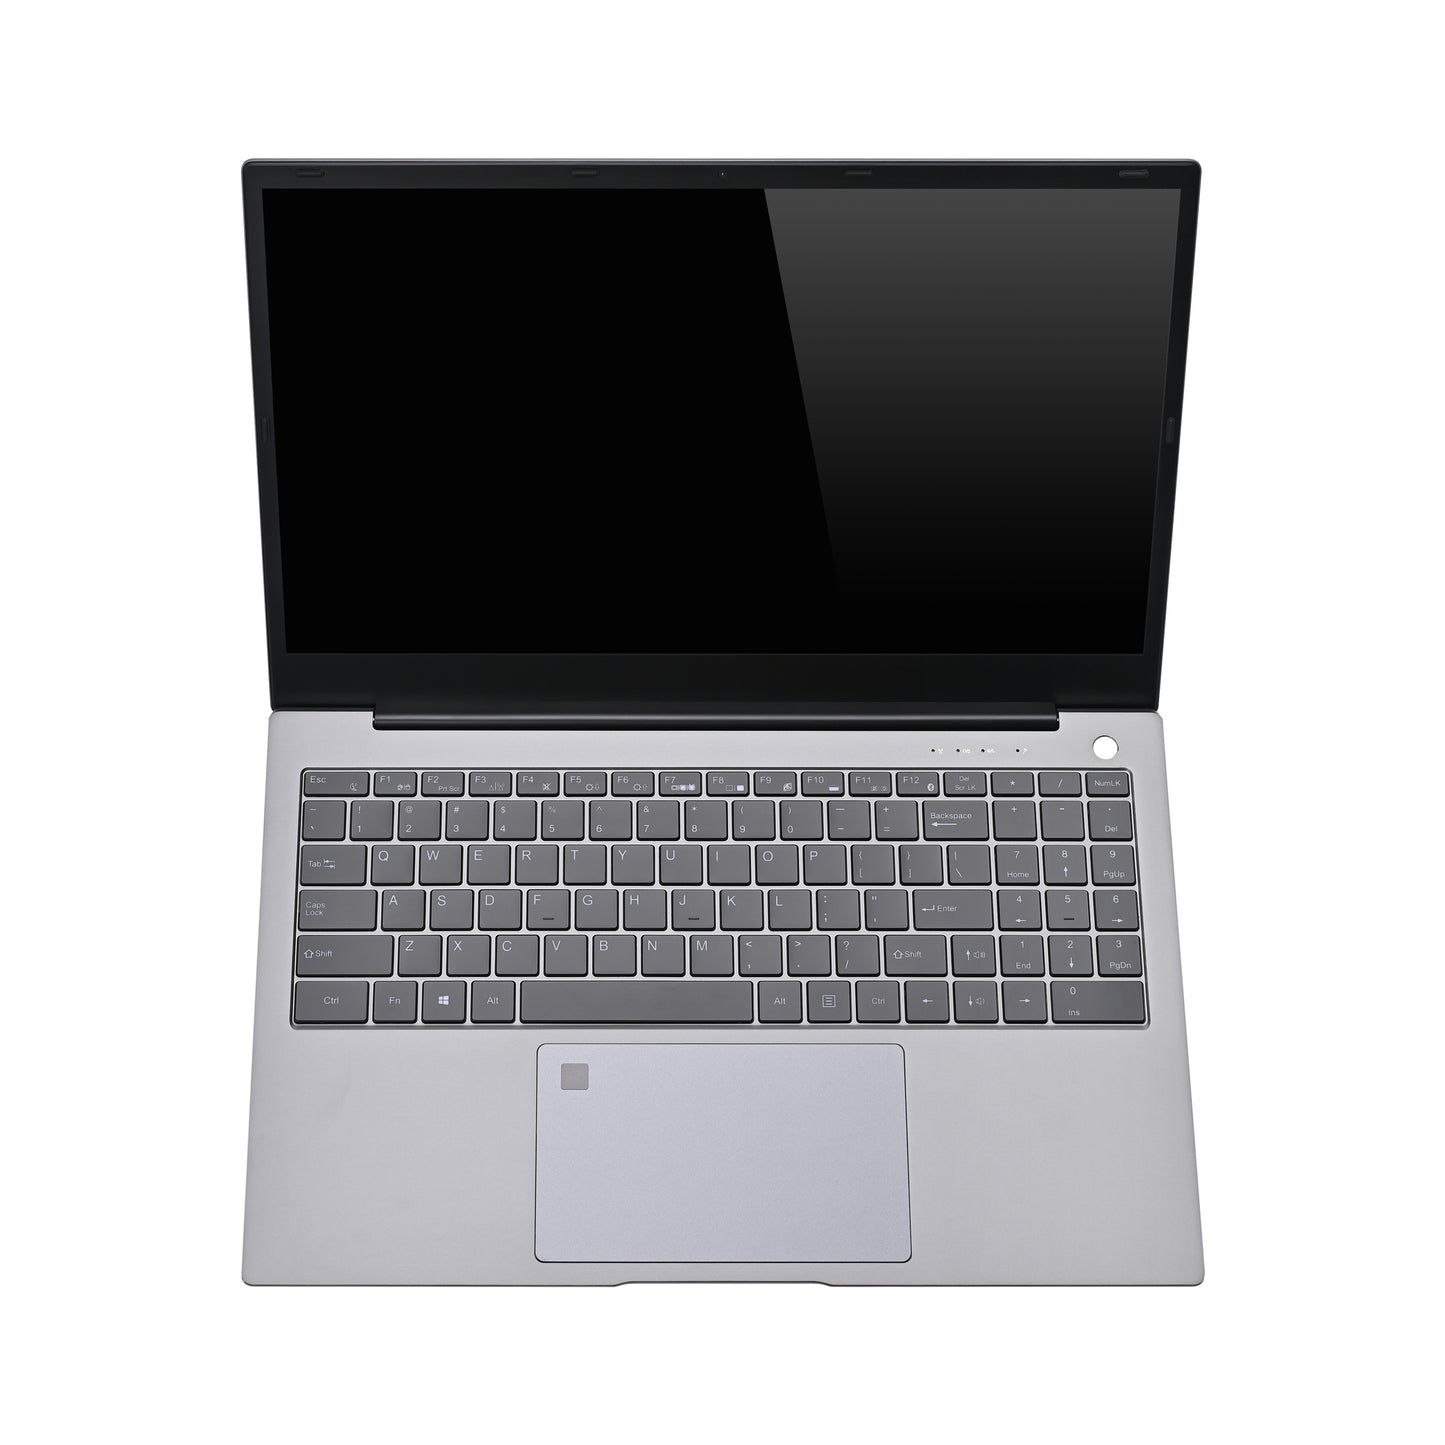 15.6 inch i7-1165G7, 8GB/16GB RAM, 512GB/1TB SSD, Backlit Keyboard, Fingerprint Reader Computer Gaming Laptop